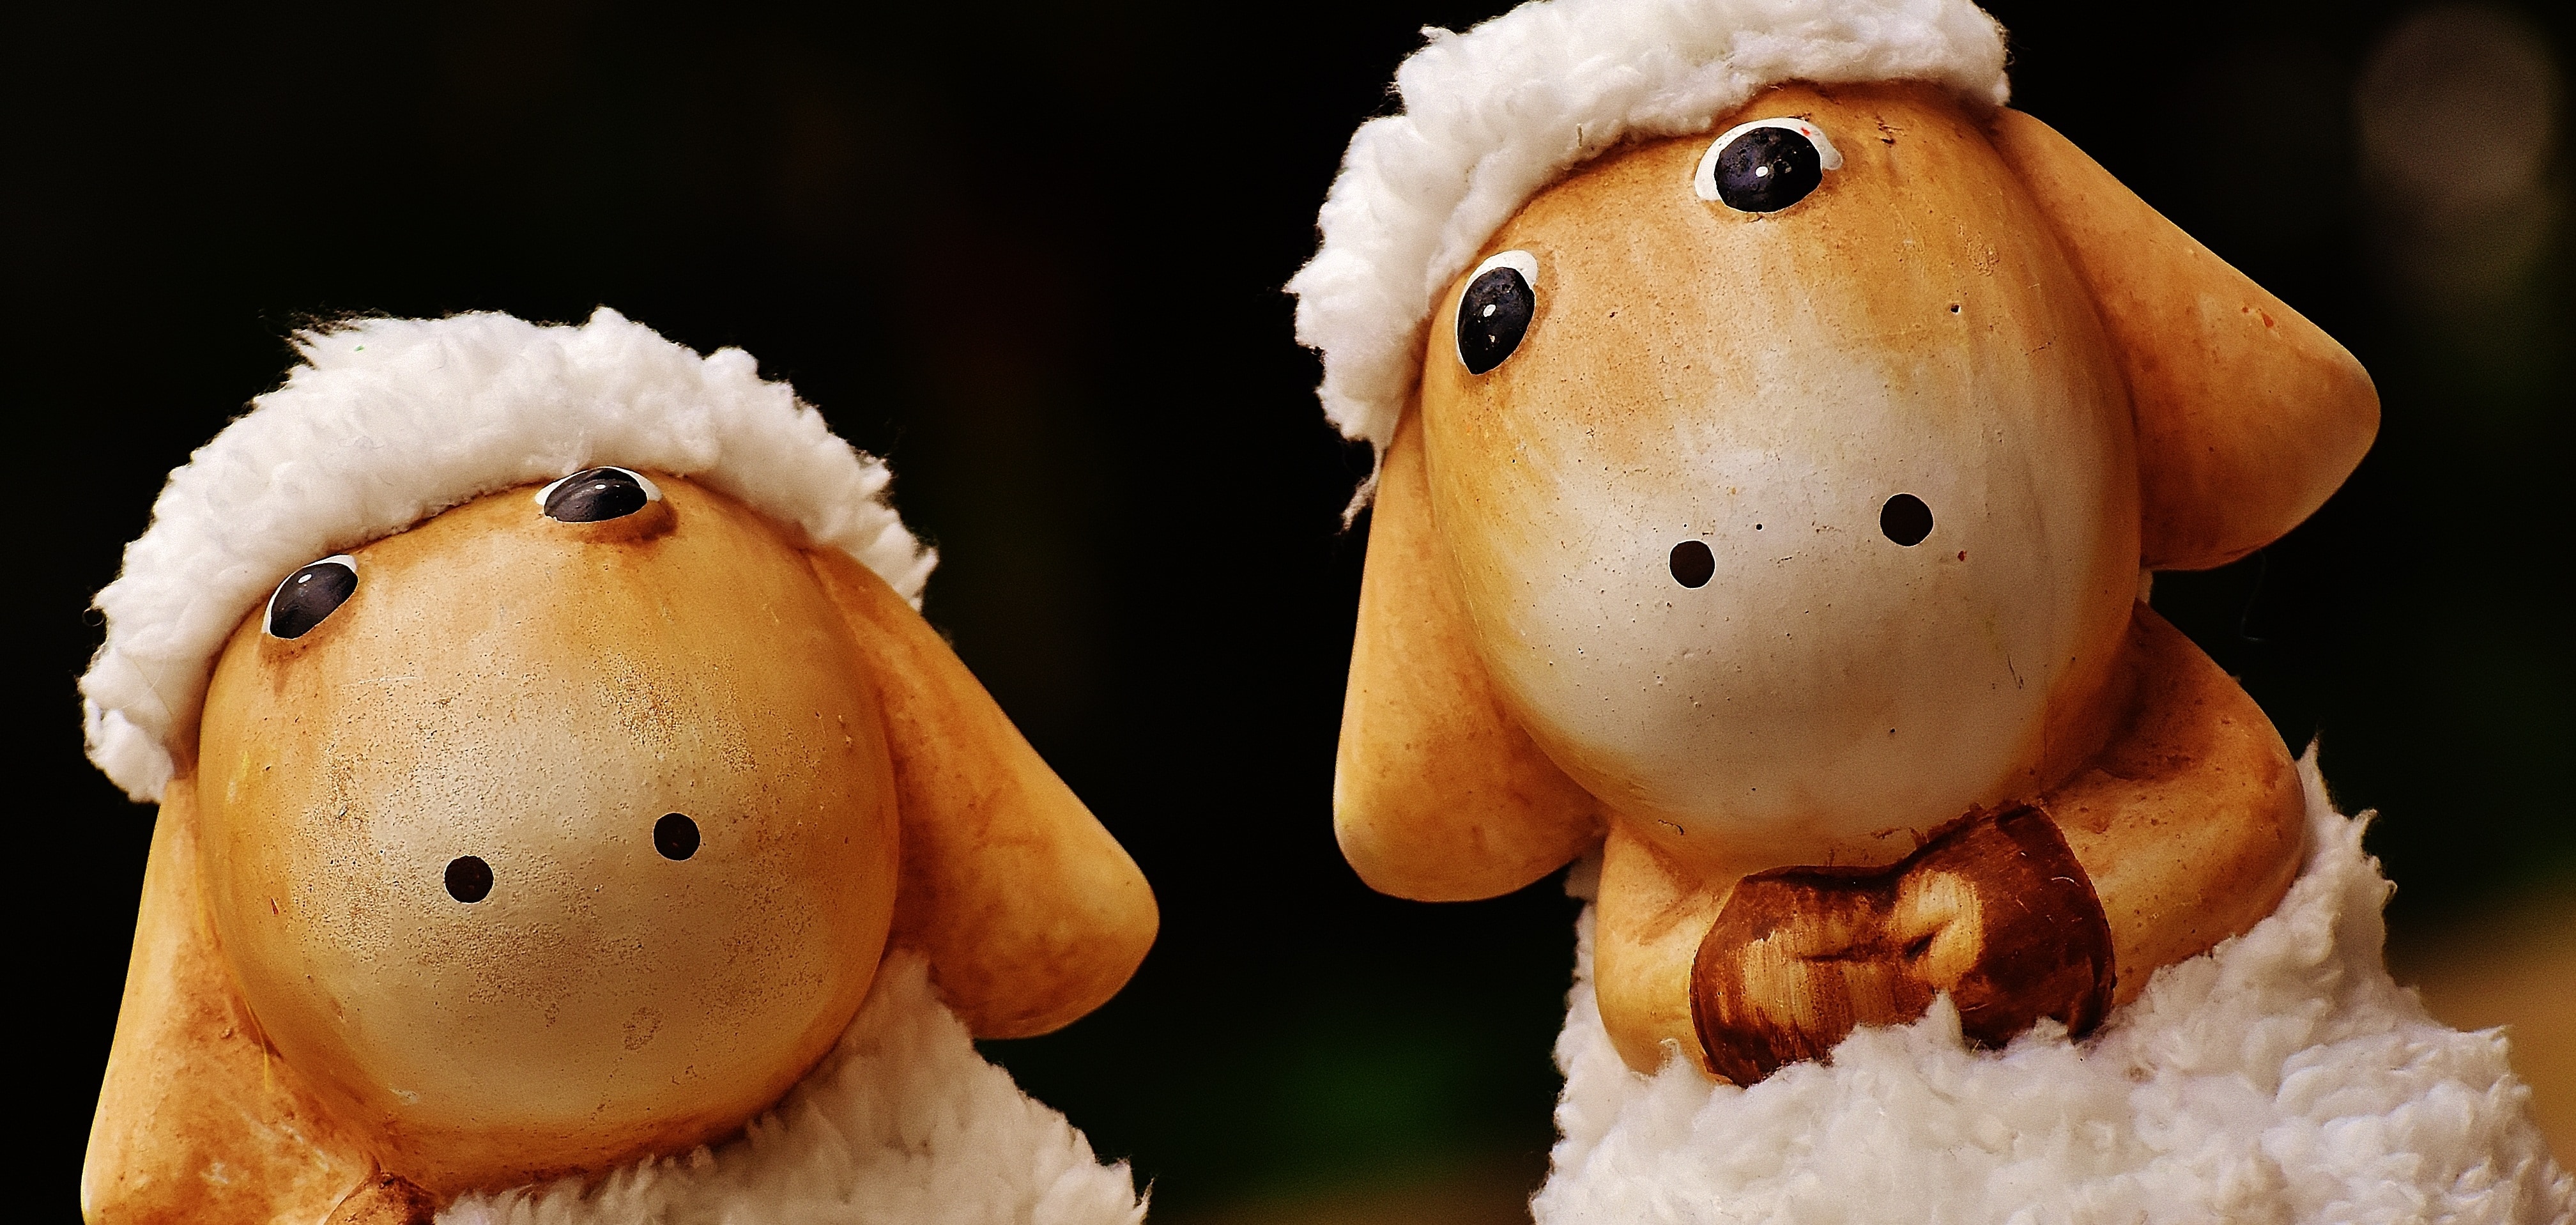 brown sheep figurines